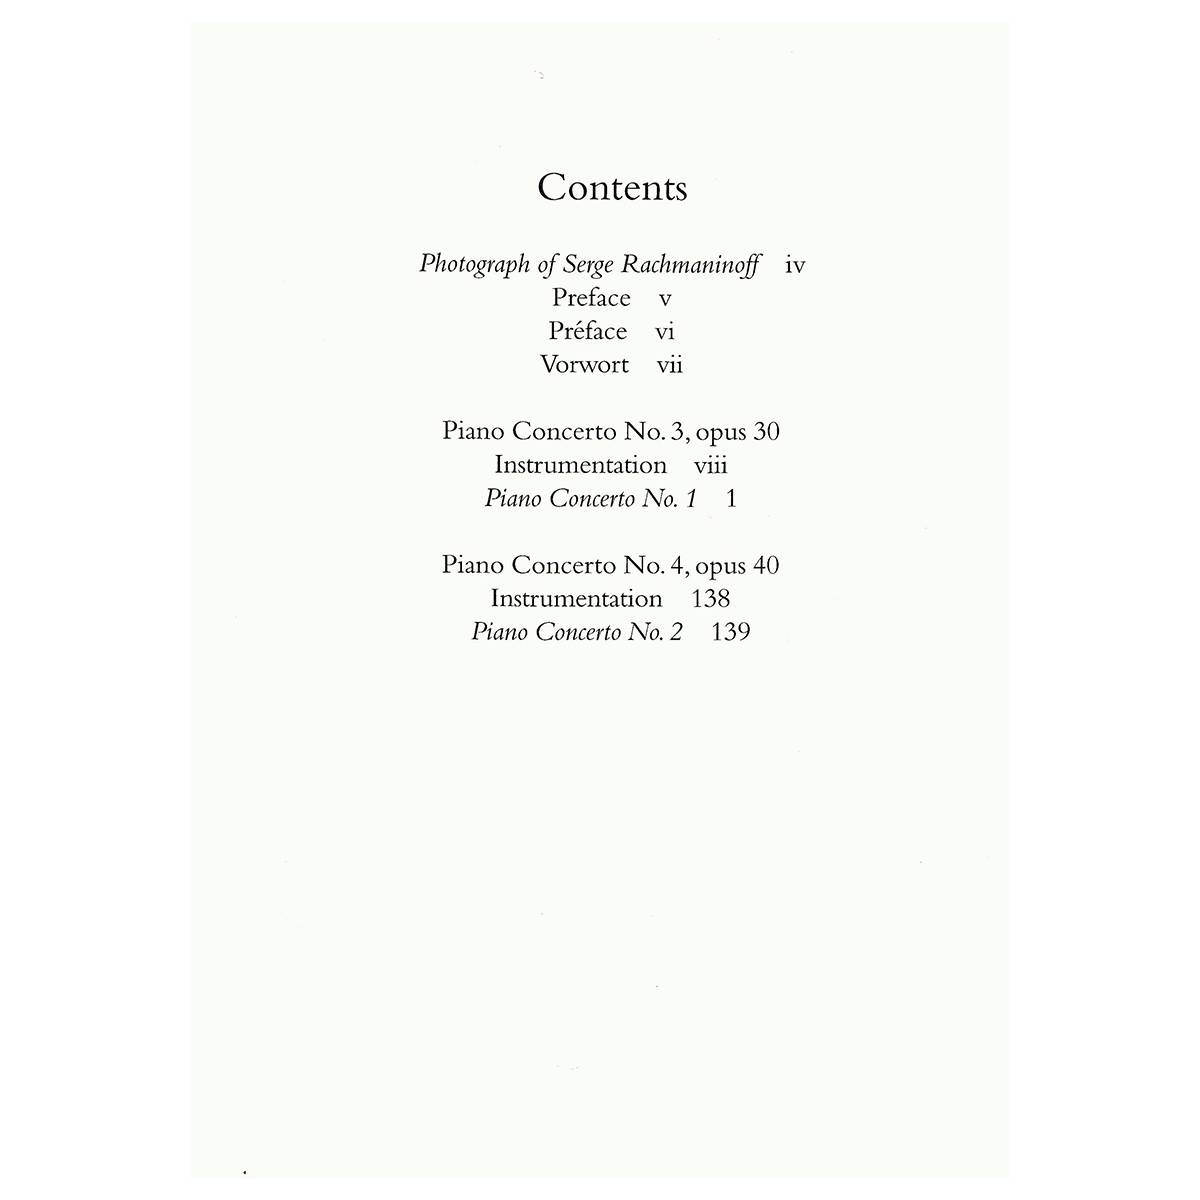 Rachmaninoff - Piano Concertos 3 & 4 [Full Score]